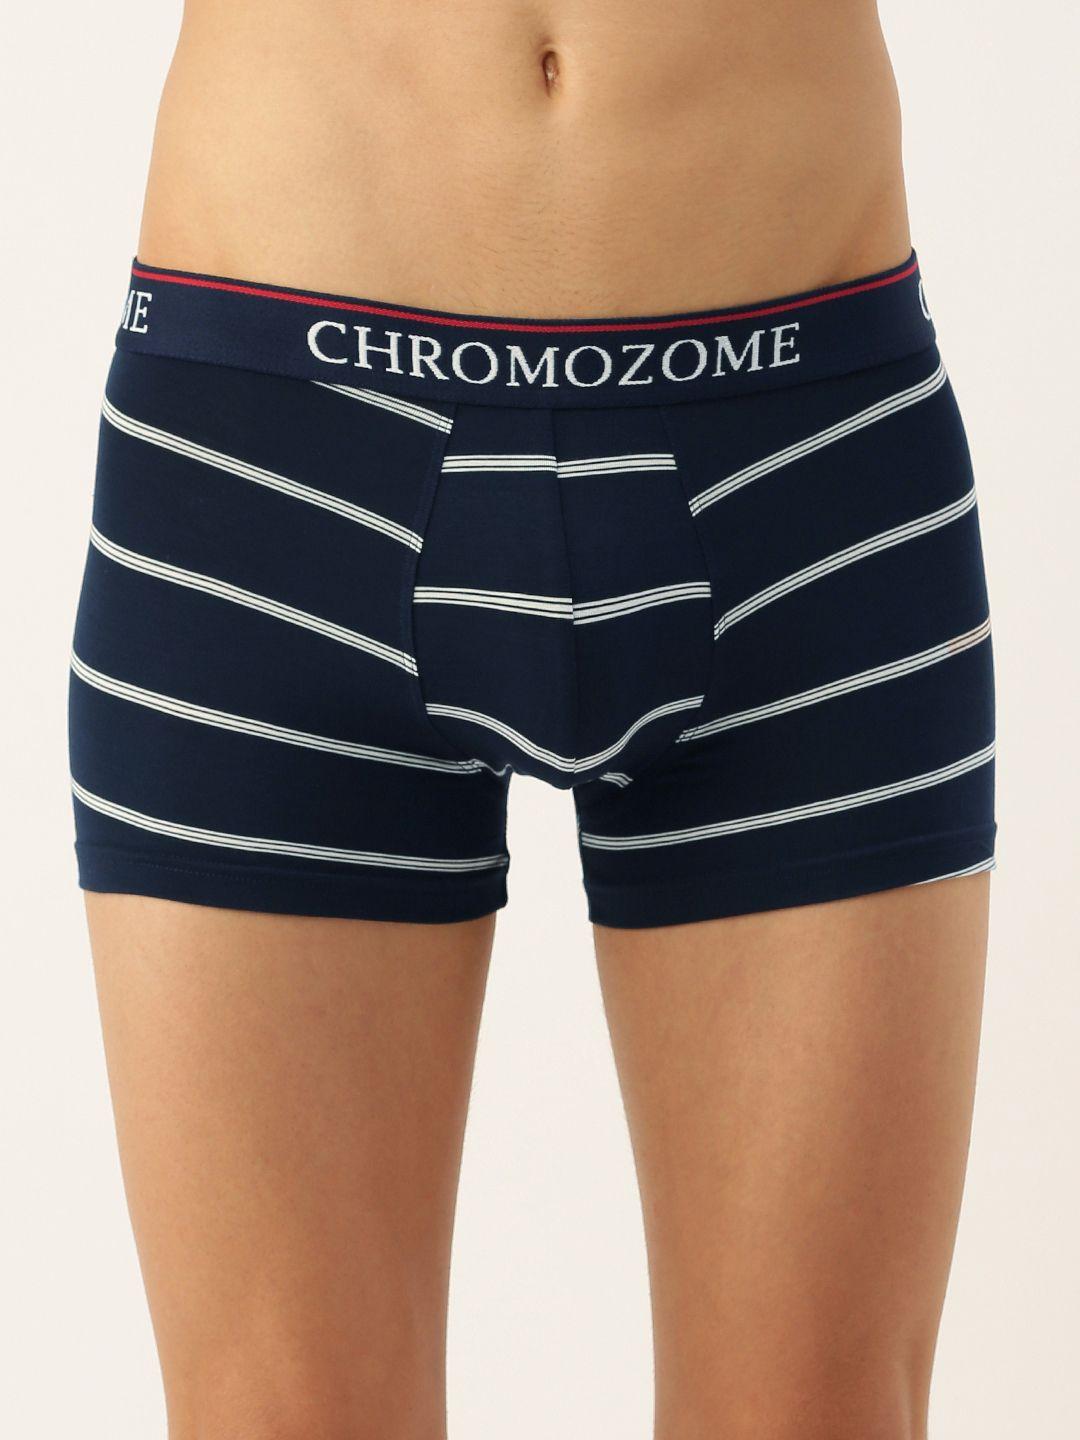 chromozome men ultra-premium micro-modal striped trunk 8902733643269